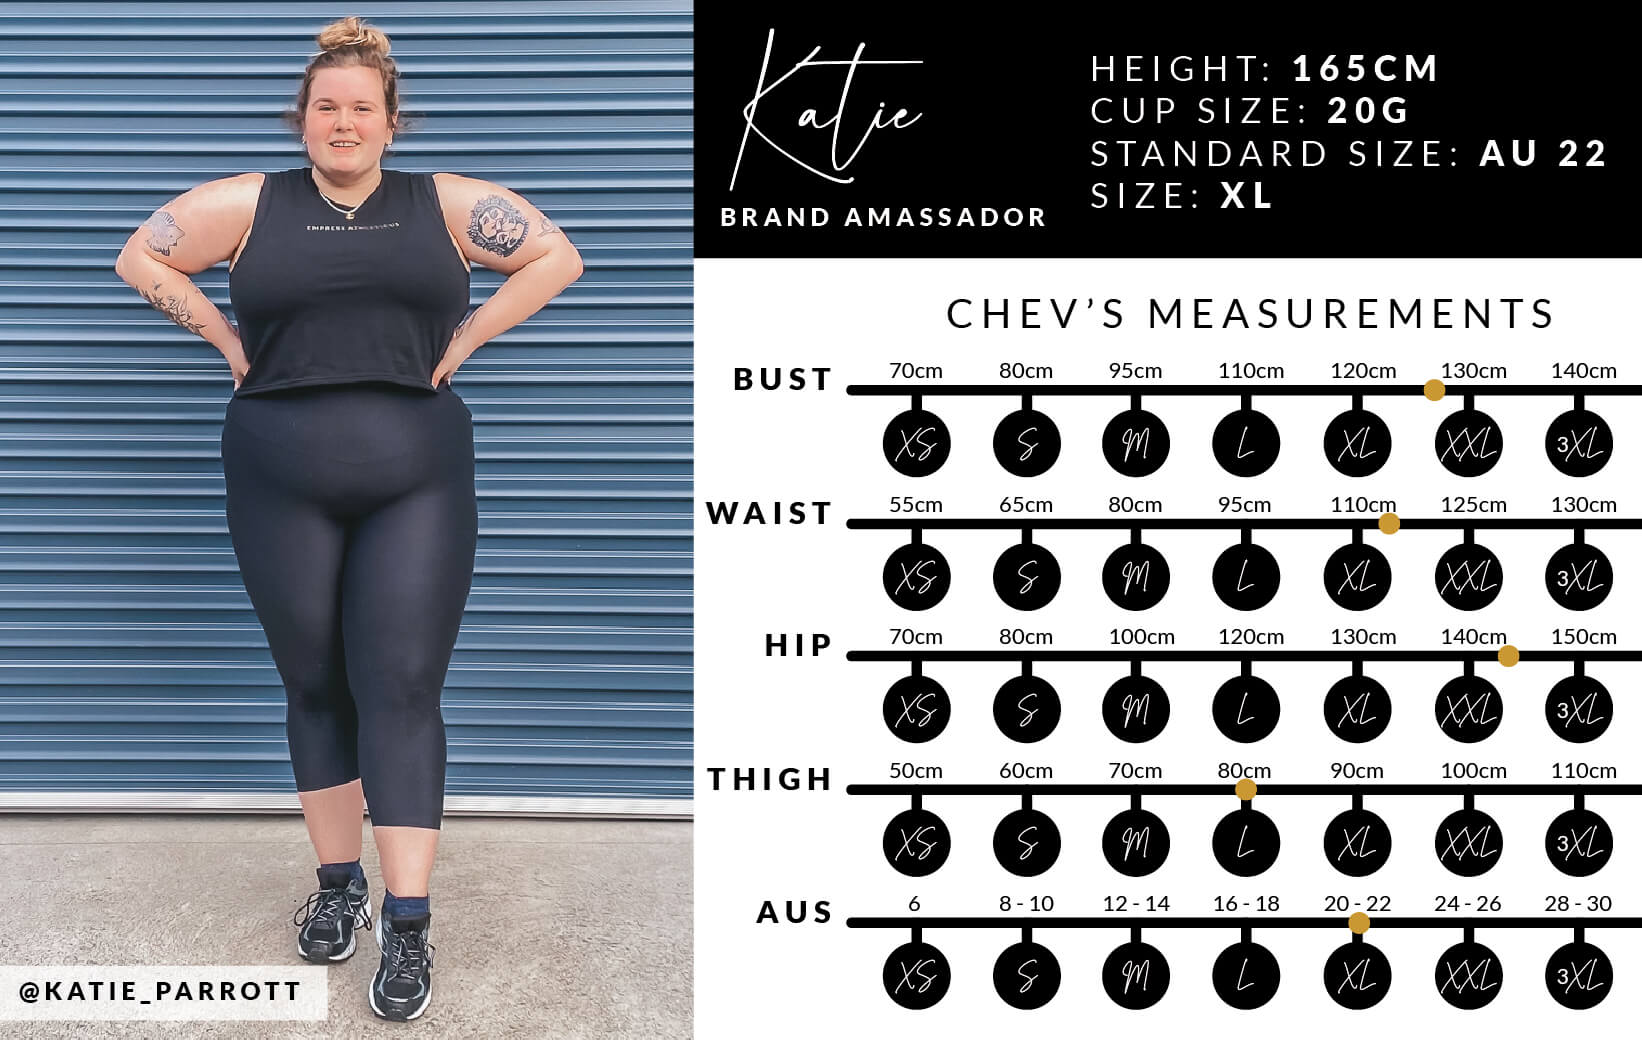 Katie's Measurements and Size Details